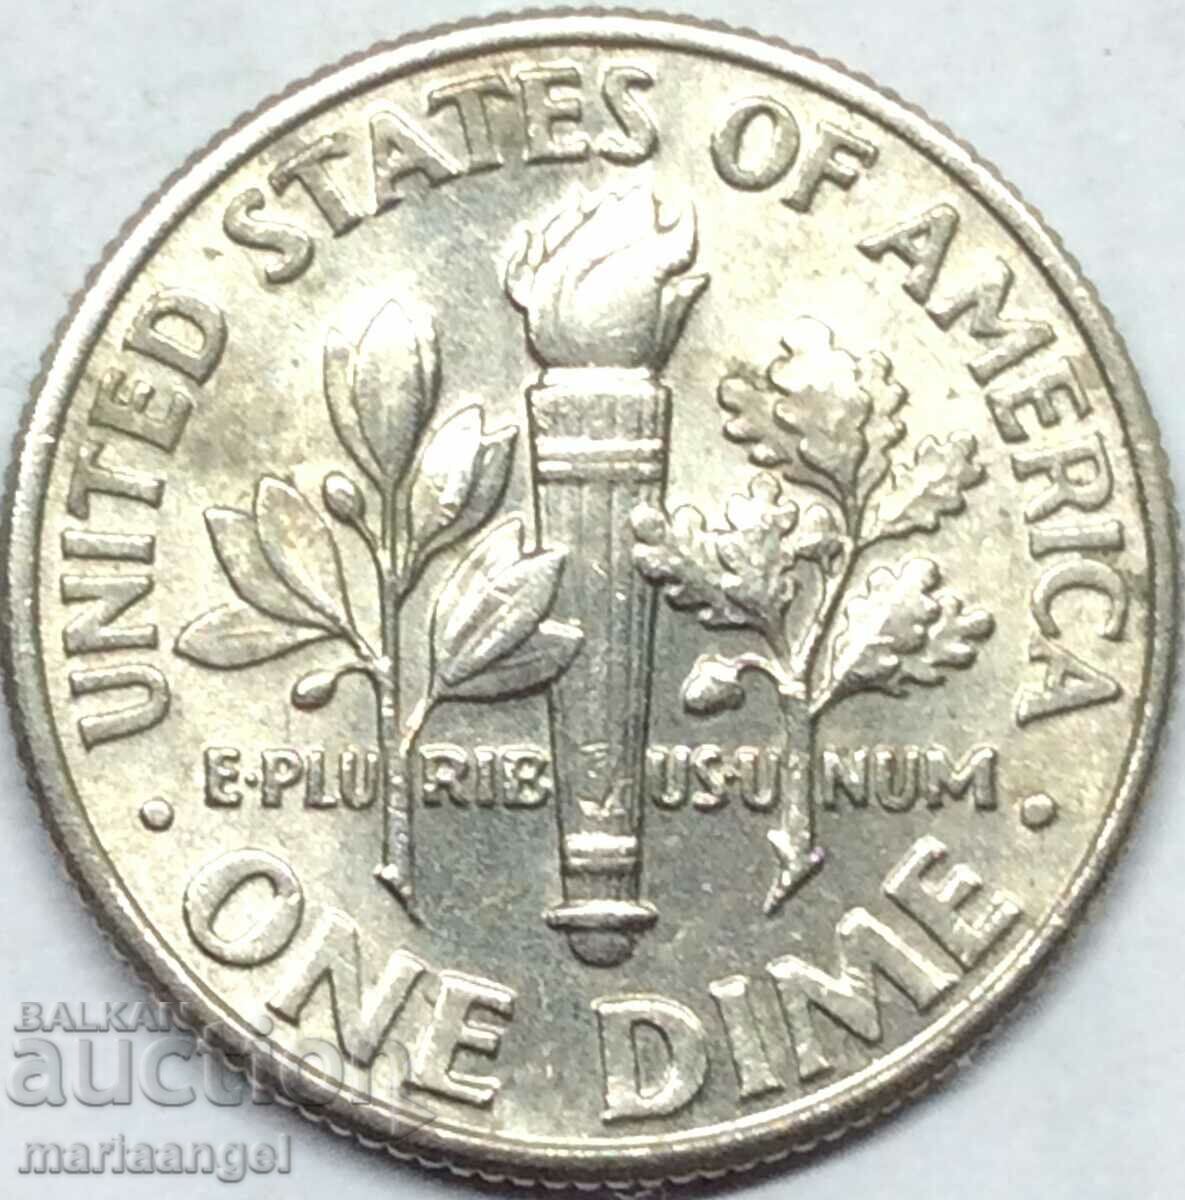 1 dime 2003 USA 10 cents